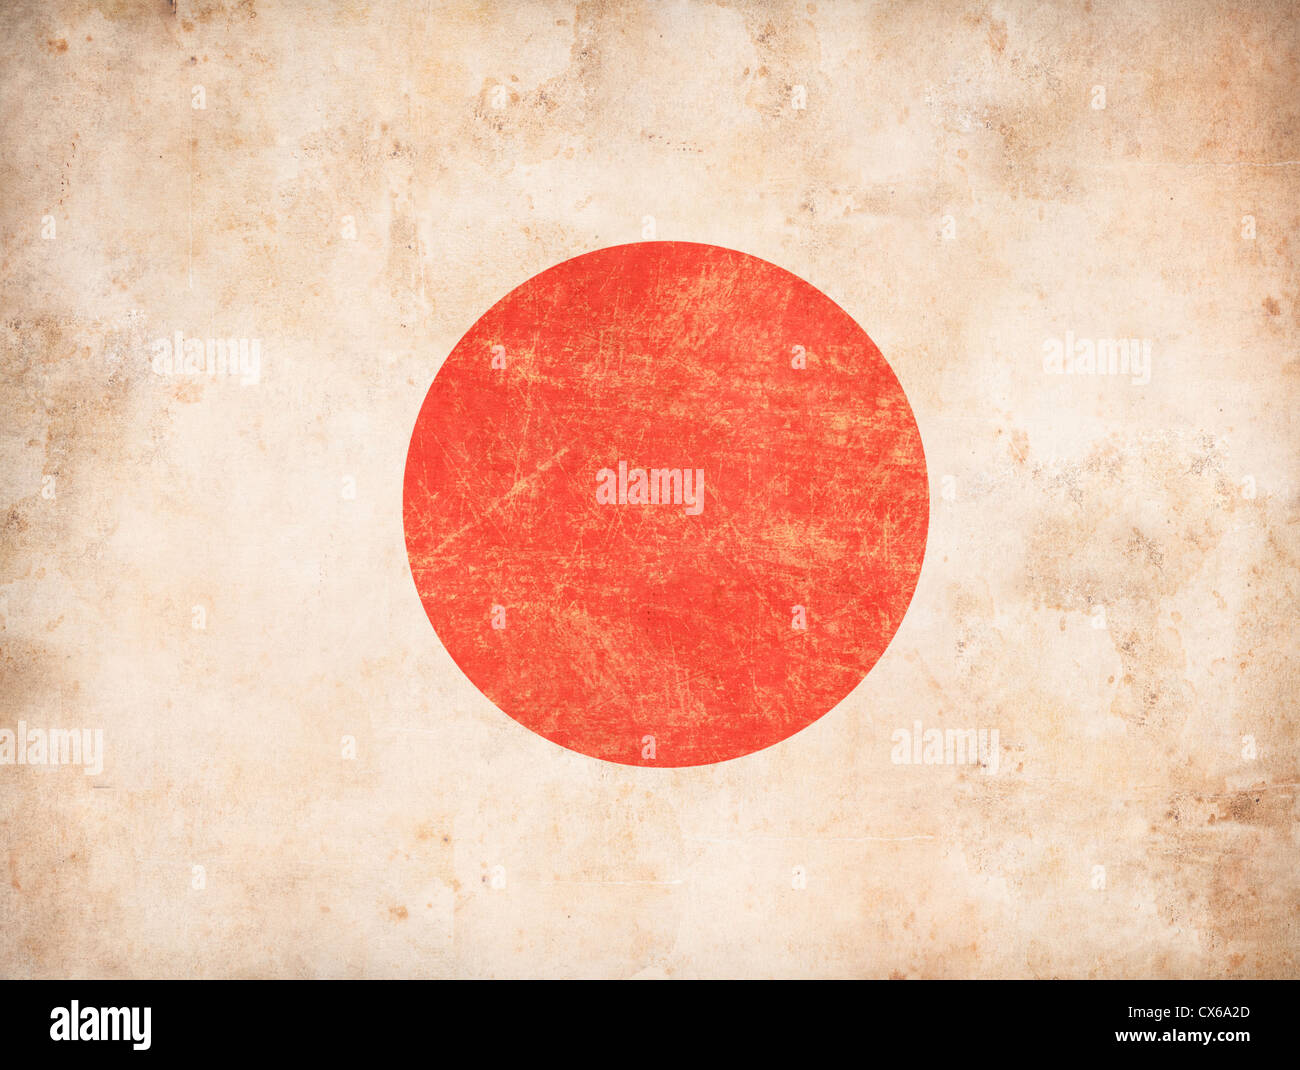 Grunge Japan flag Stock Photo